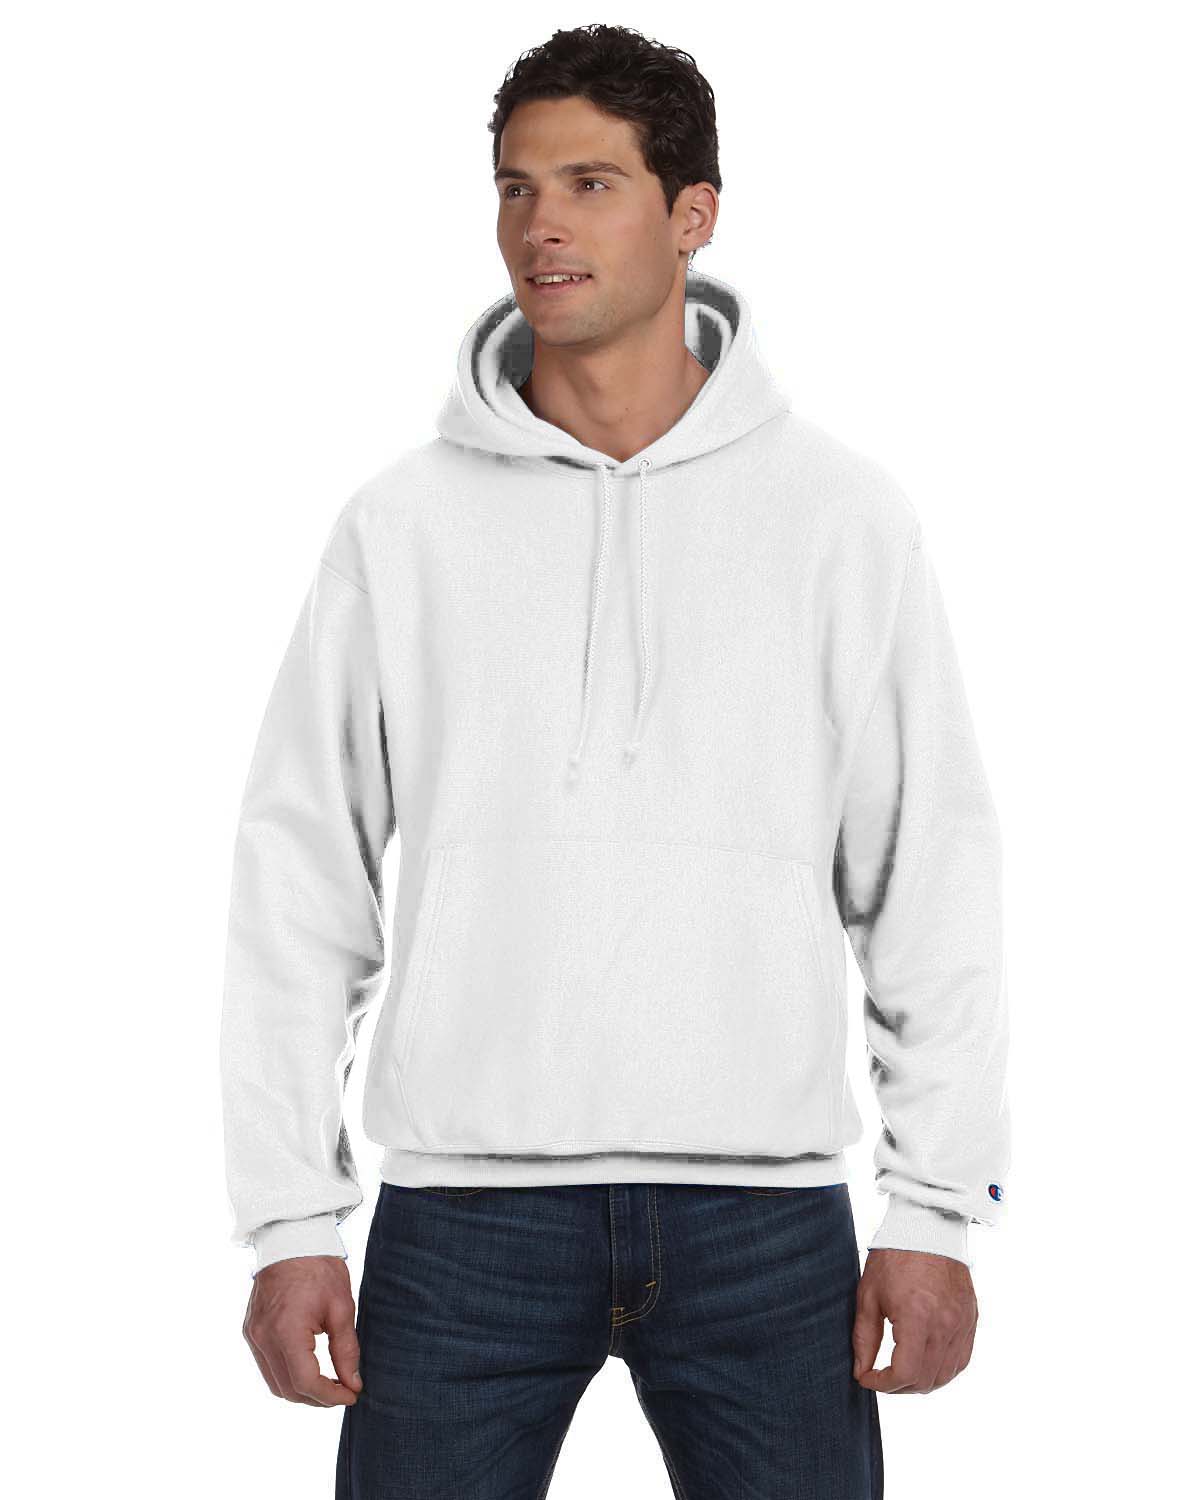 blank champion hoodie wholesale